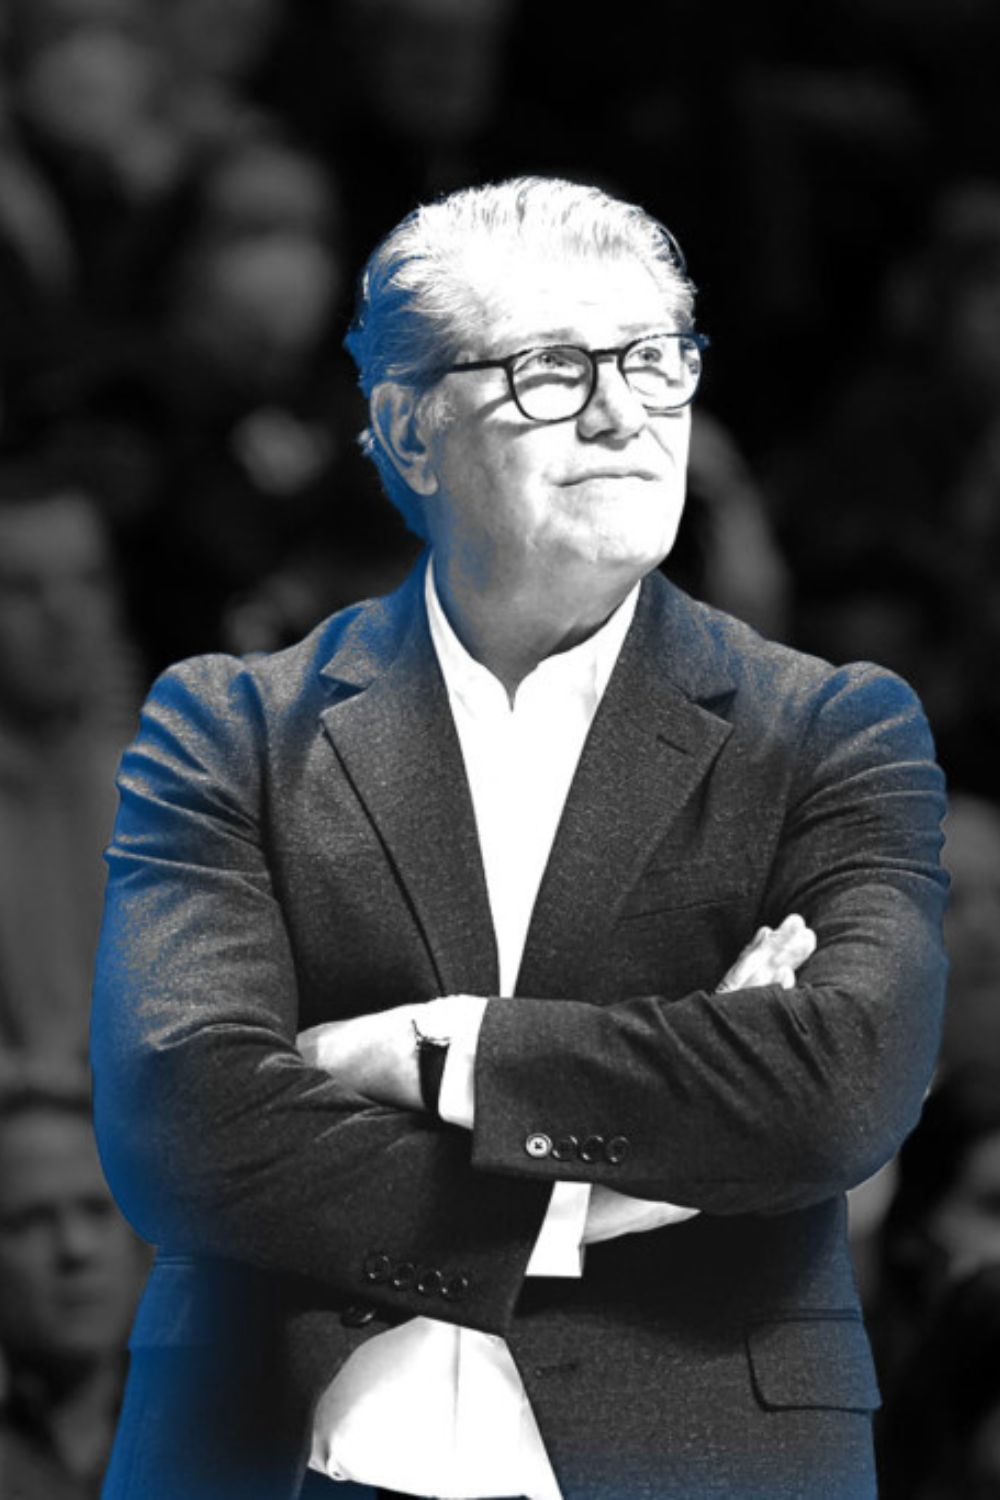 Geno Auriemma, Basketball Coach